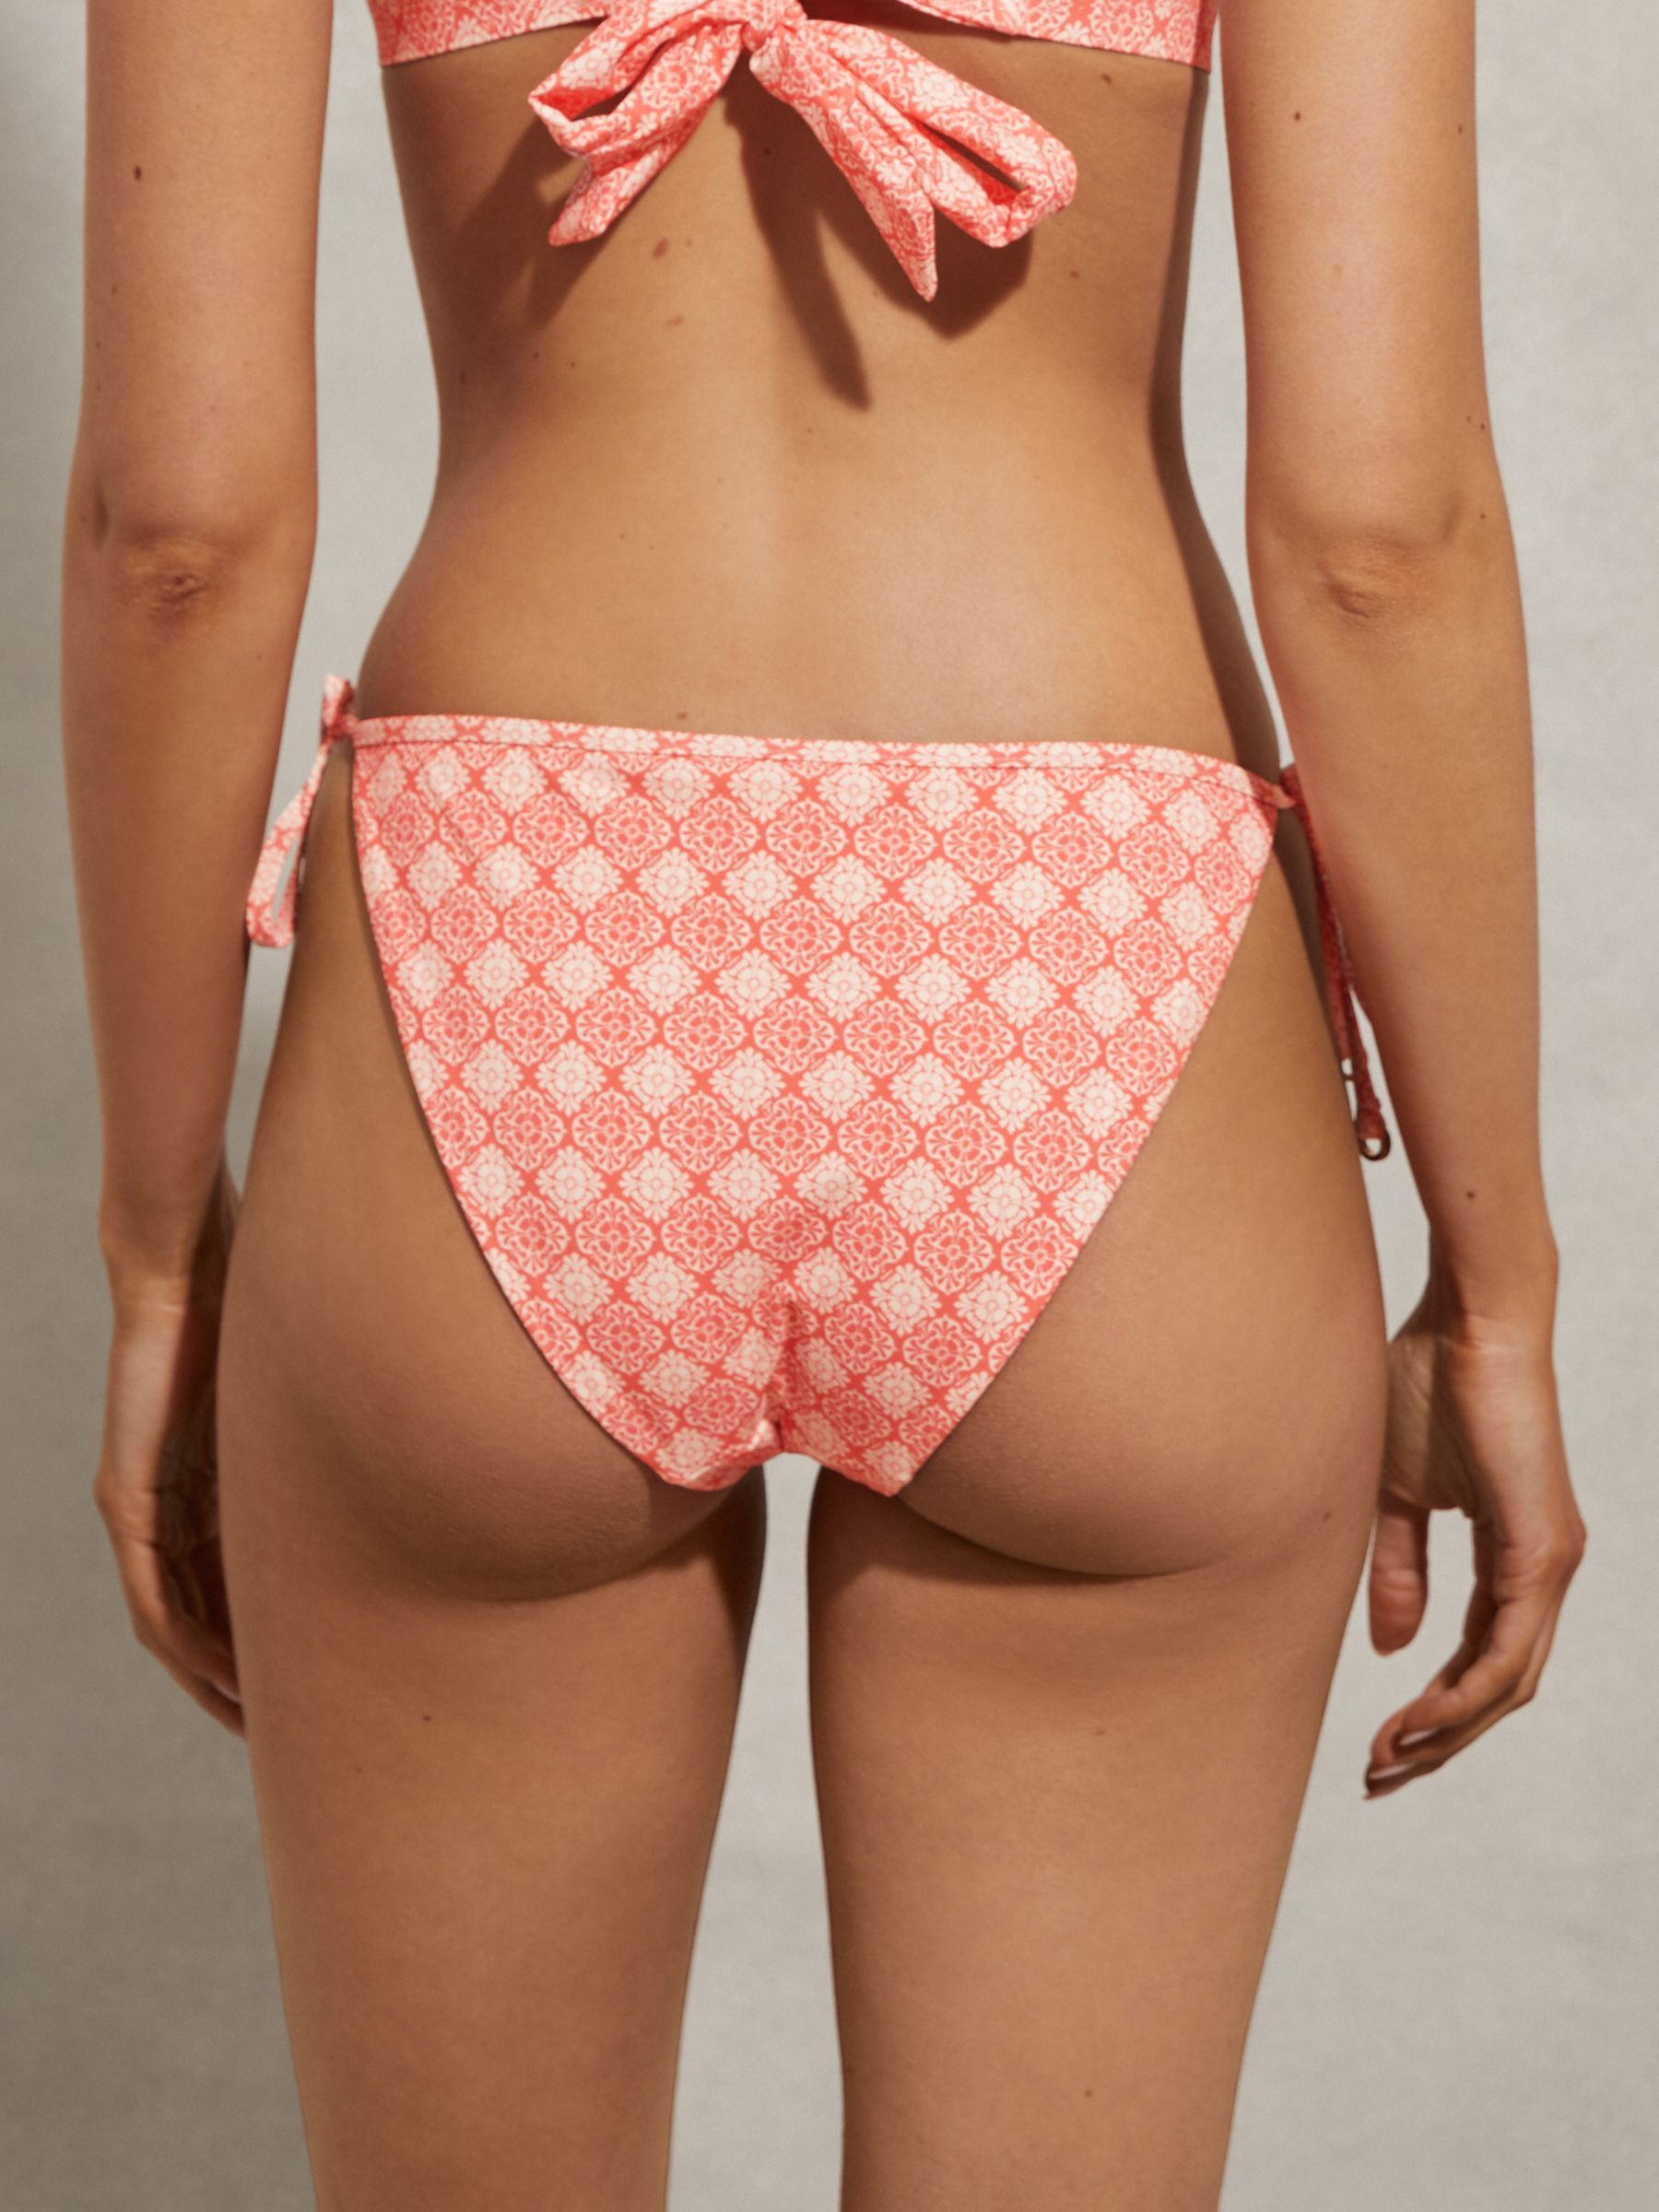 Reiss Kallie Tile Print Tie Side Bikini Bottoms, Cream/Coral, 6